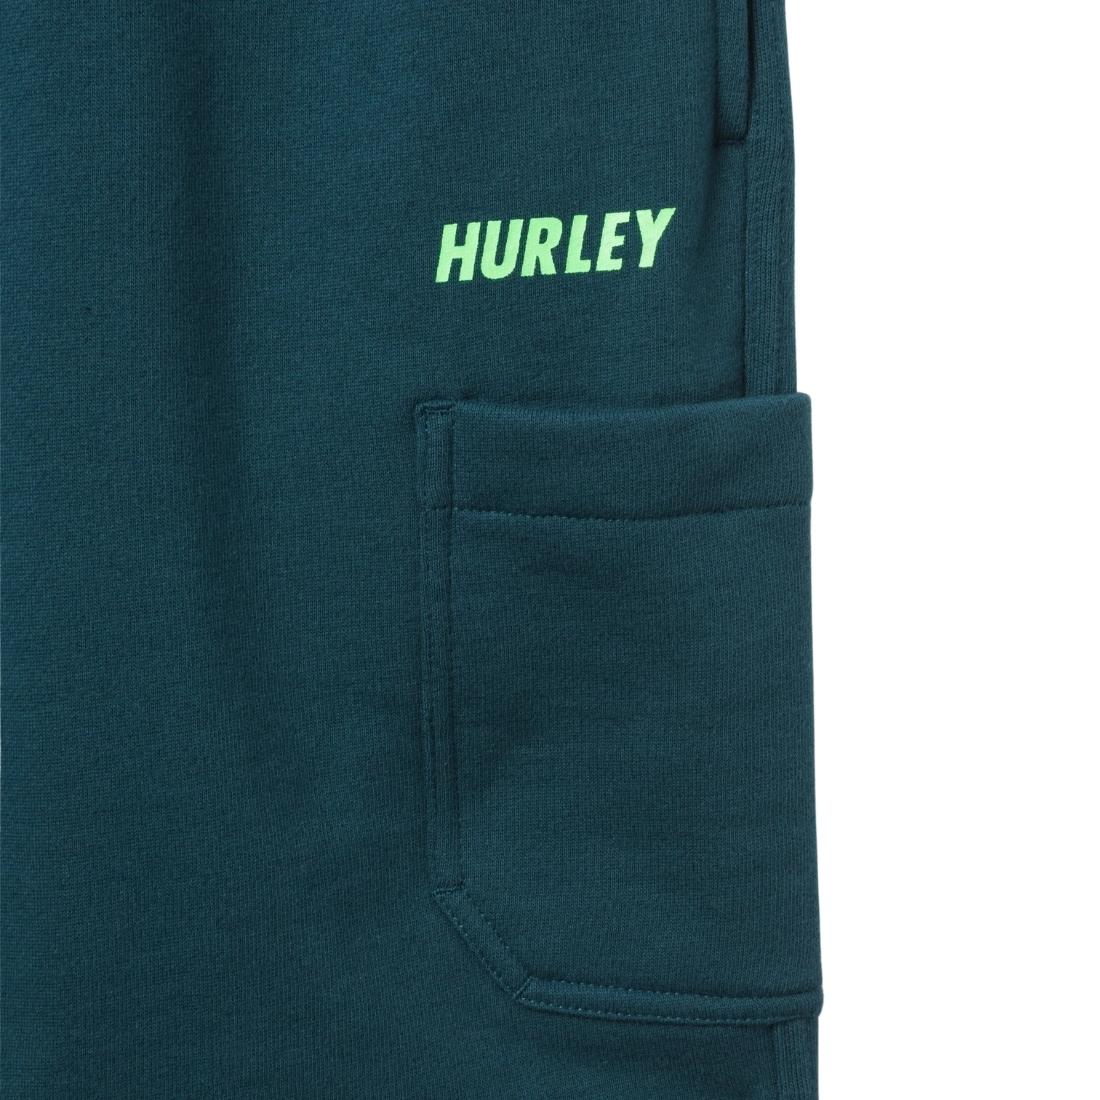 Hurley Explore Ranger Fleece Shorts - Nightshadow - Mens Gym Shorts by Hurley